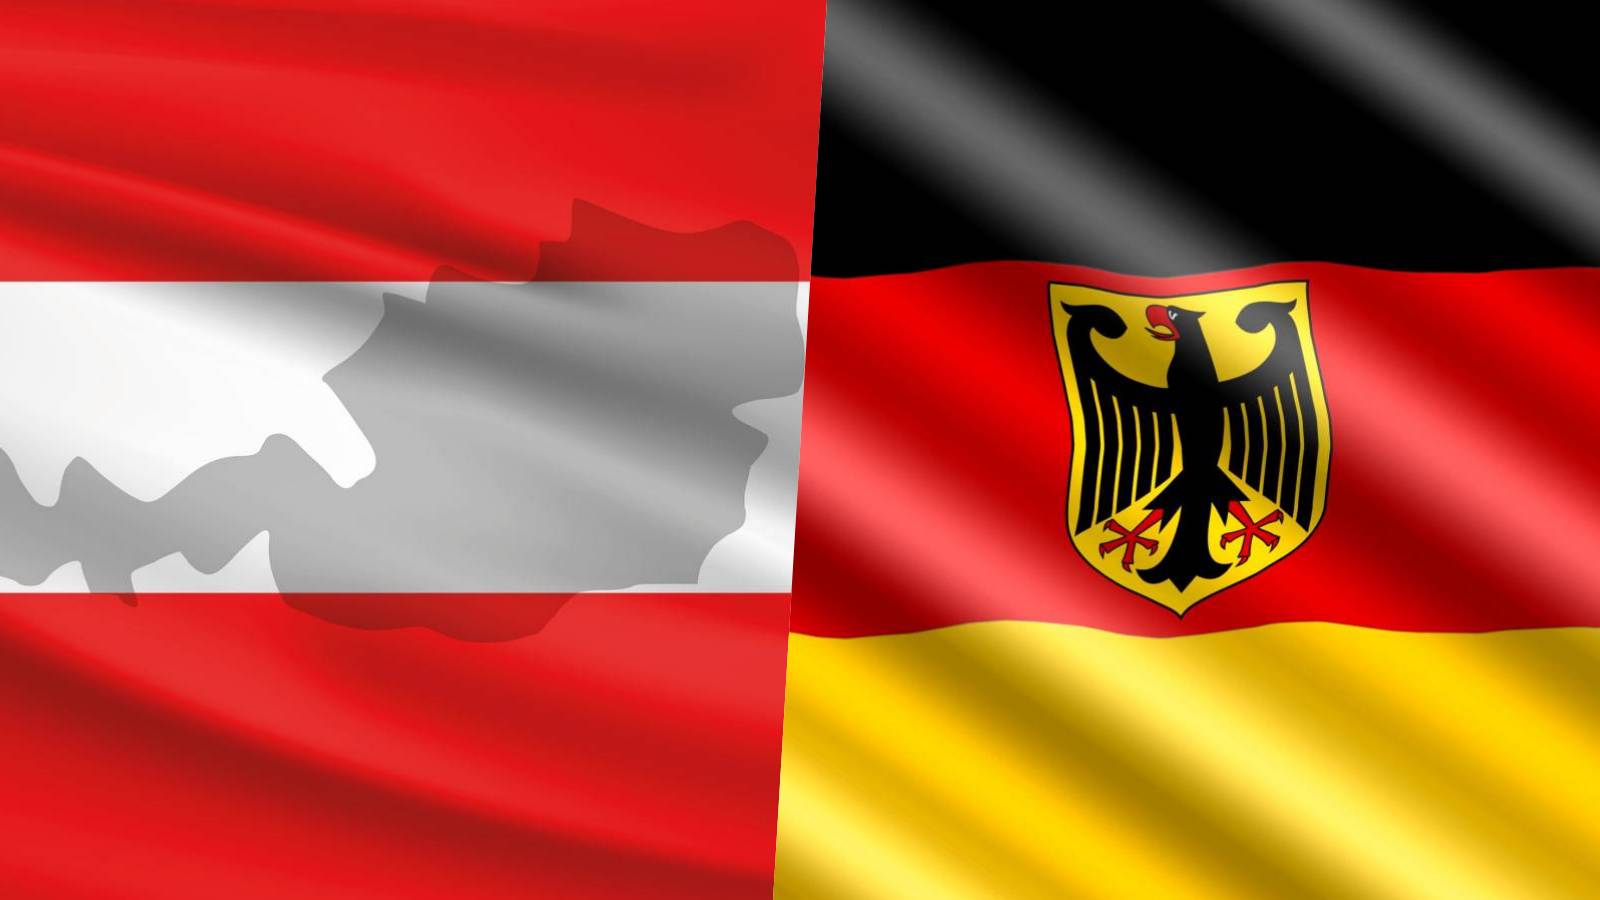 Austria Resimte LOVITURA Germaniei Decizia ULTIMA ORA Impotriva Nehammer Schengen